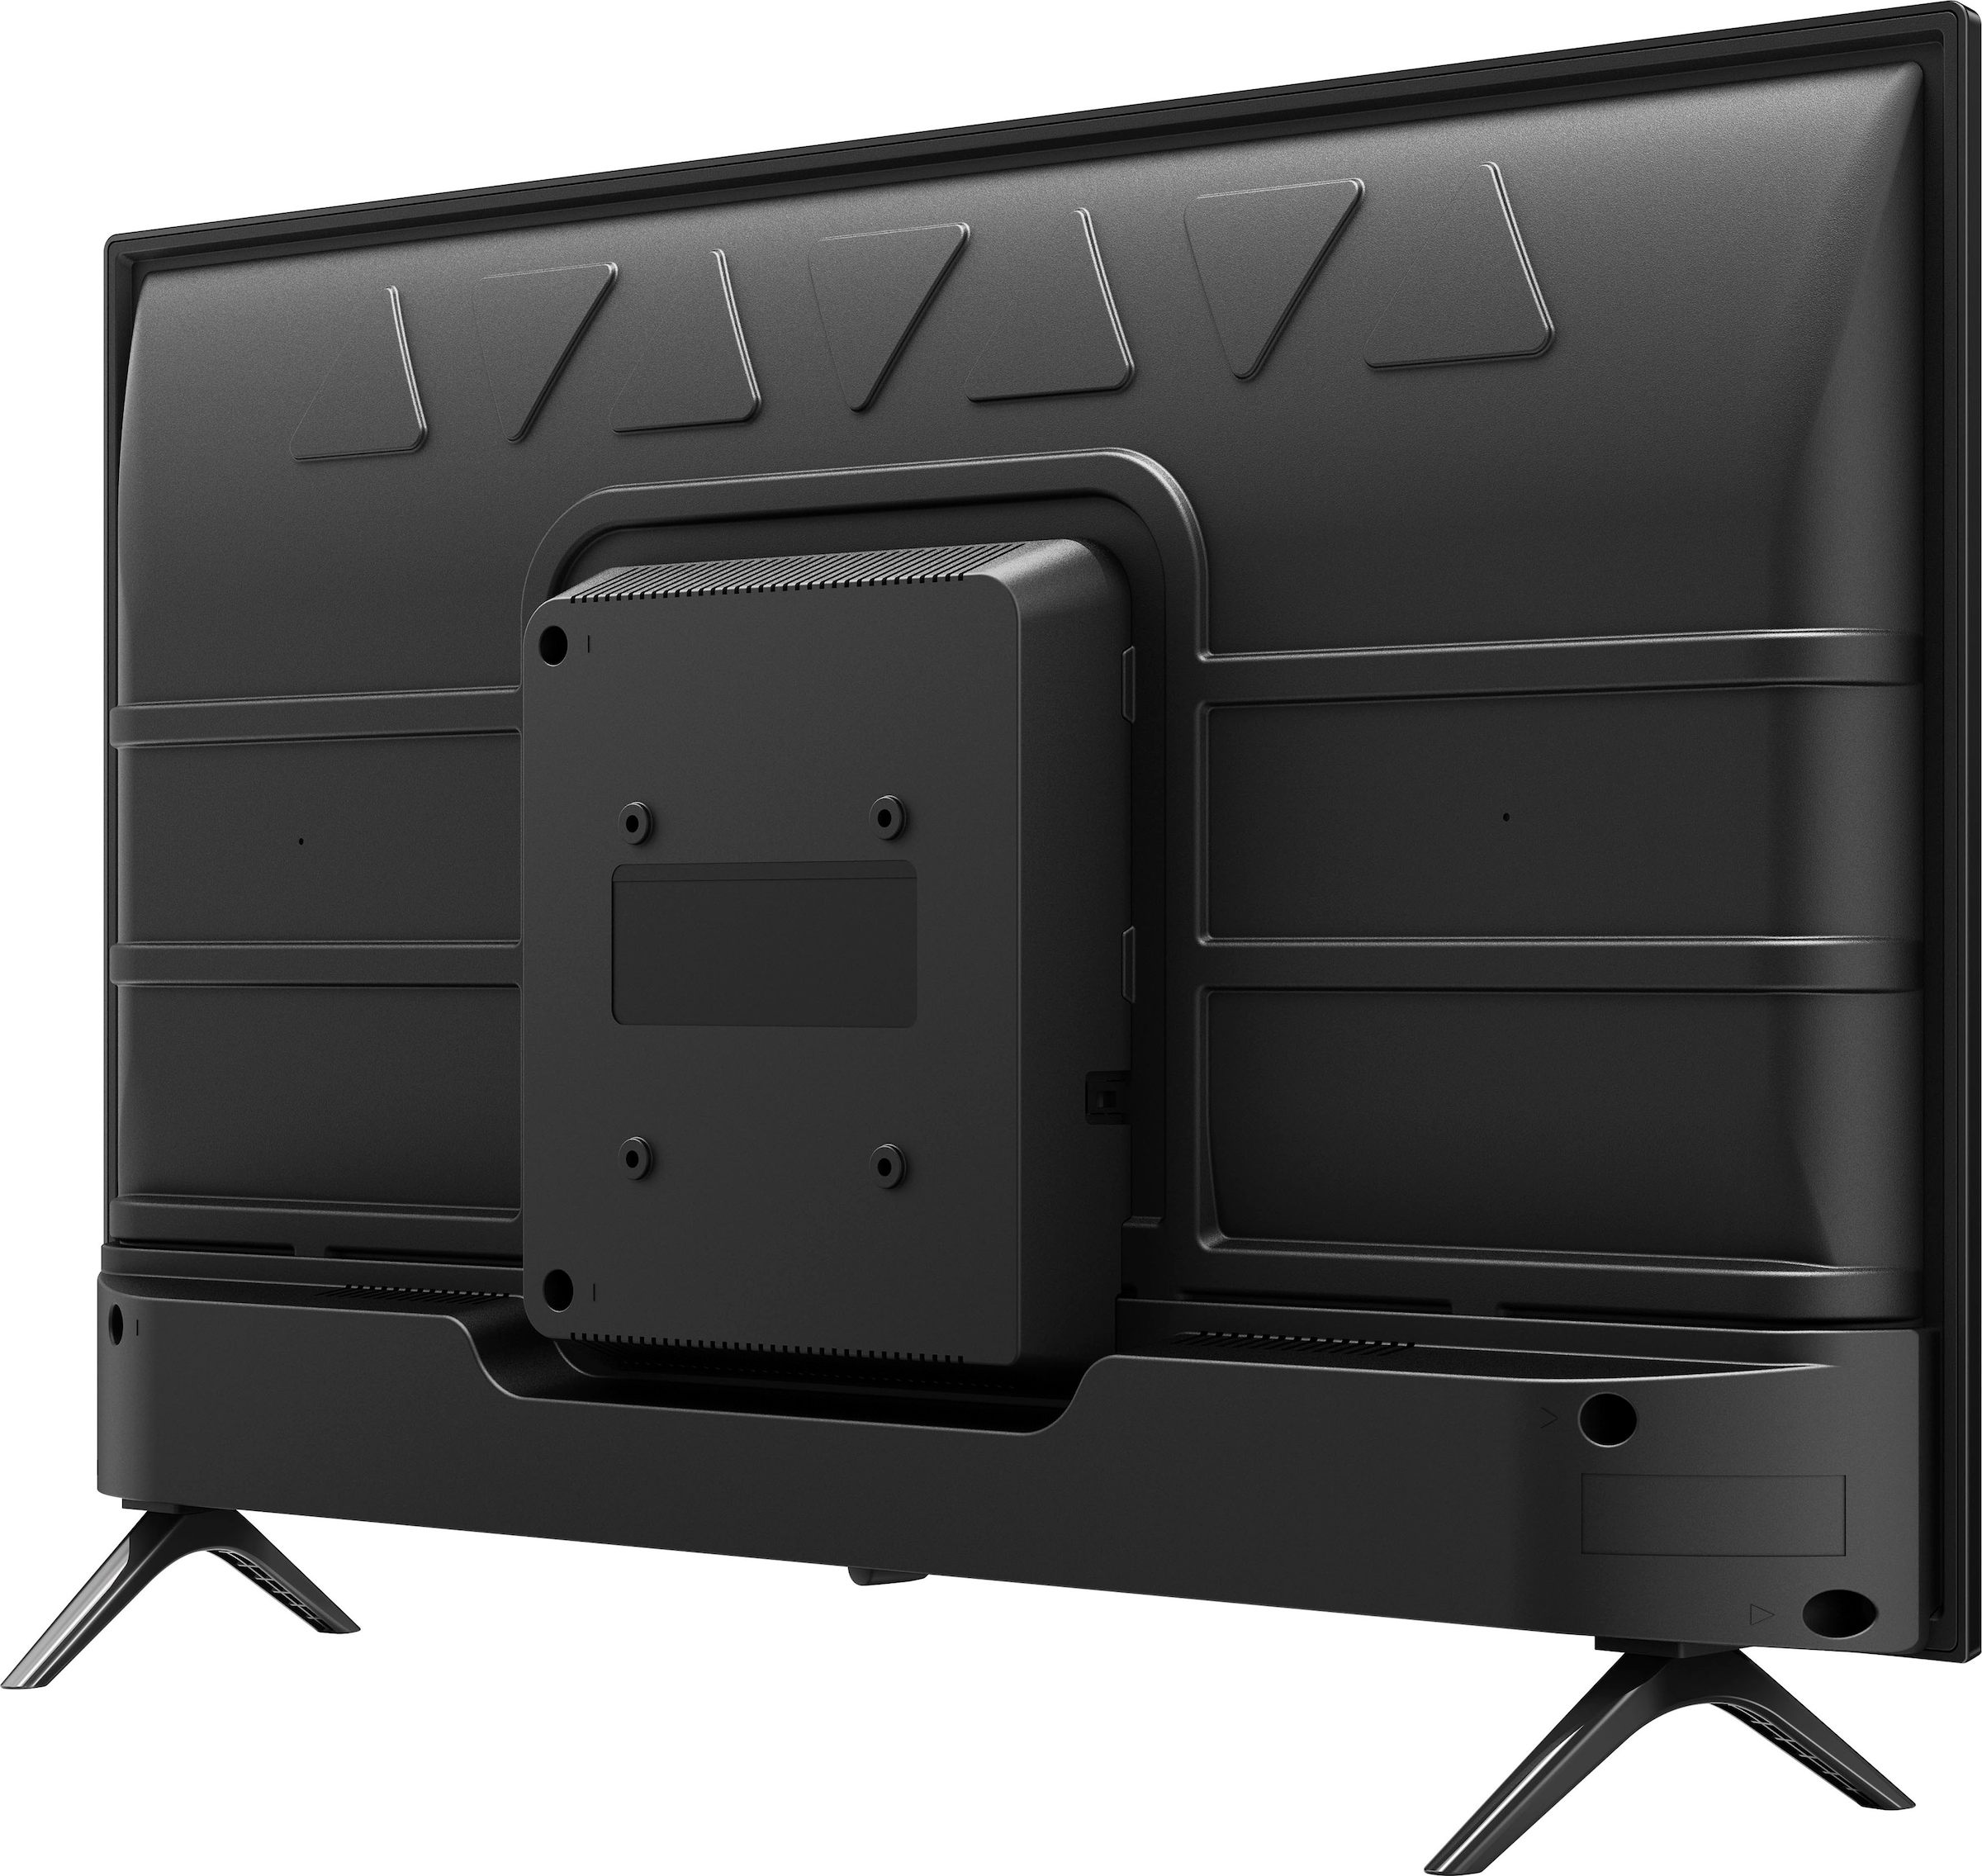 TCL LCD-LED Fernseher, 80 cm/32 Zoll, HD, Smart-TV, Roku TV, Smart HDR, HDR10, Chromecast